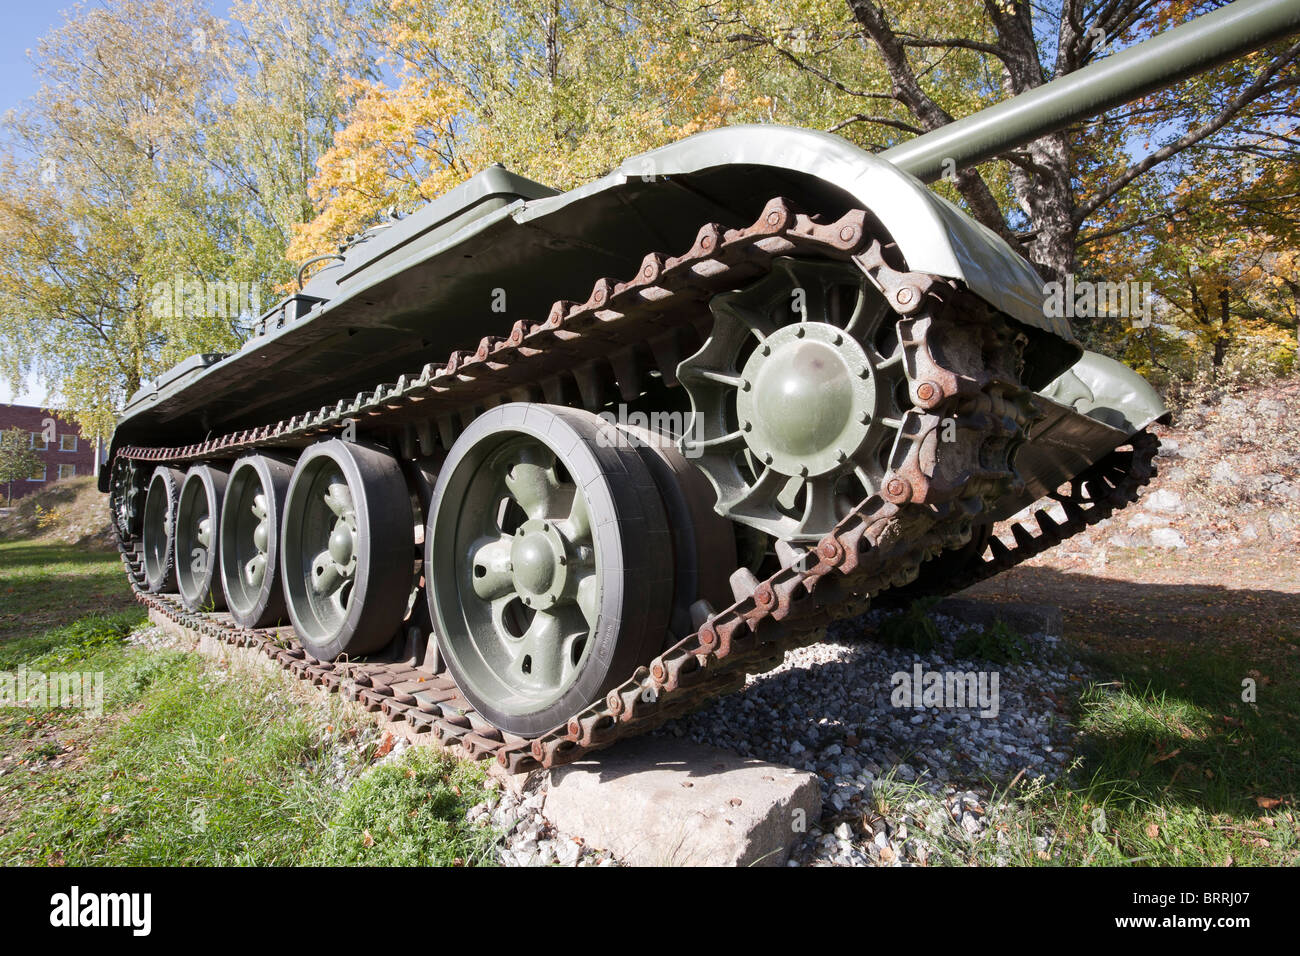 T-54 tank on display in Lappeenranta Finland Stock Photo